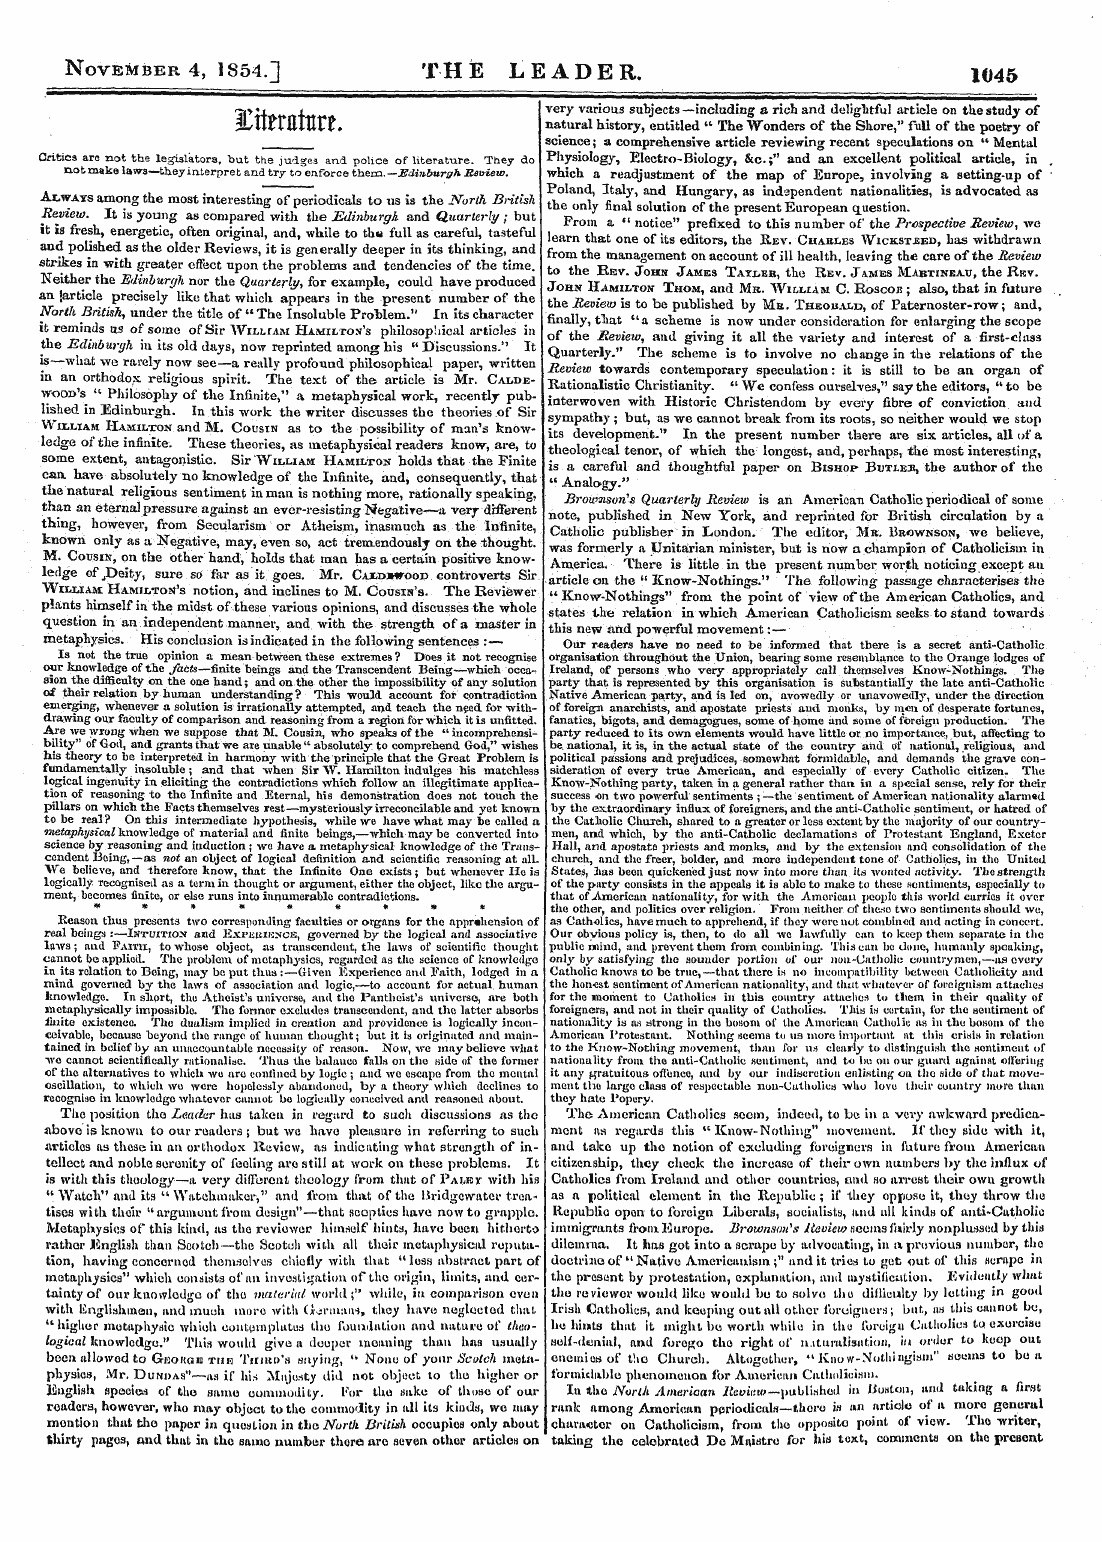 Leader (1850-1860): jS F Y, Country edition - .Y, , Jlttff Ulutf